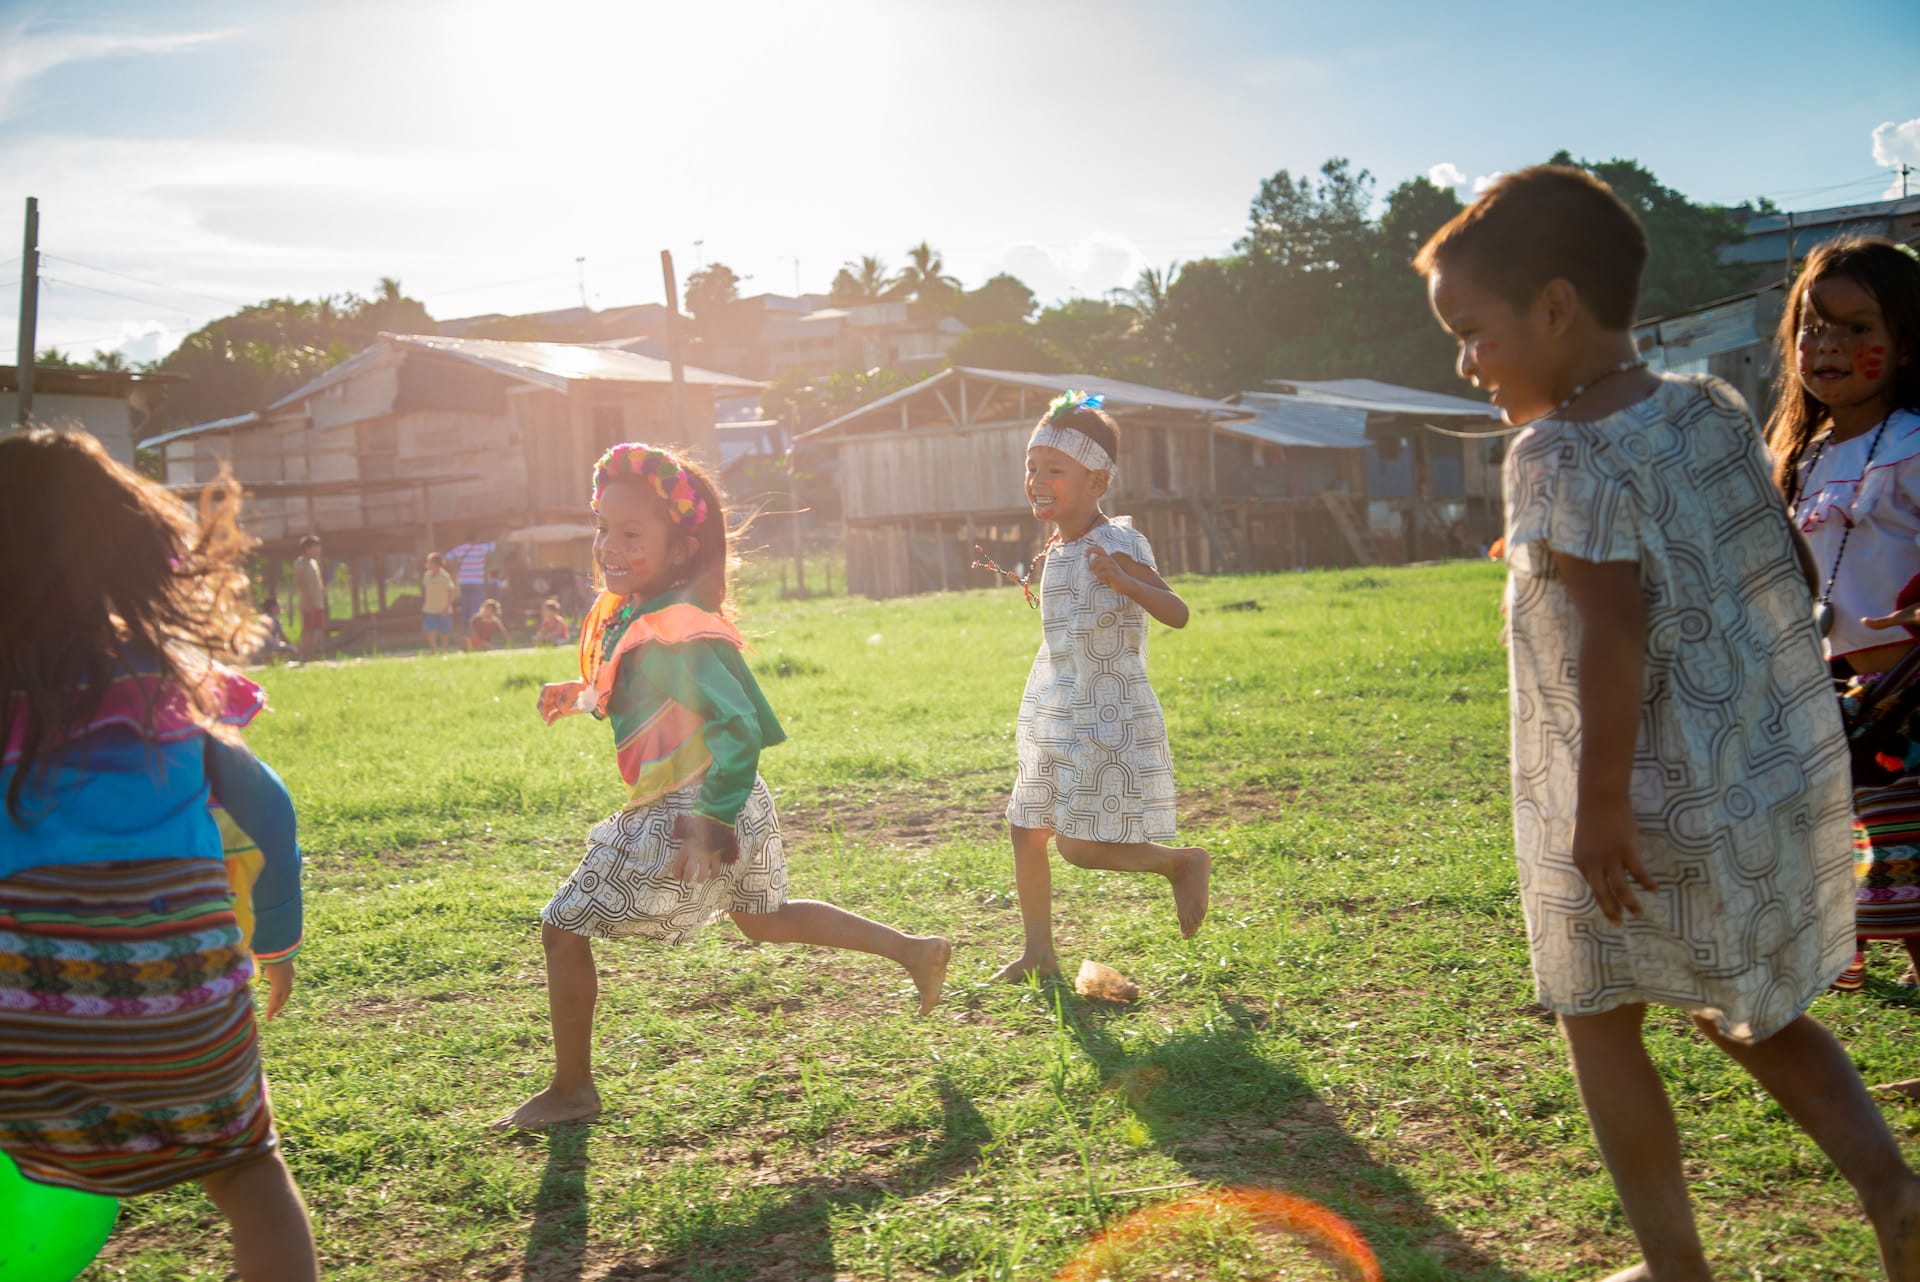 Children in colourful traditional dress run through a field.